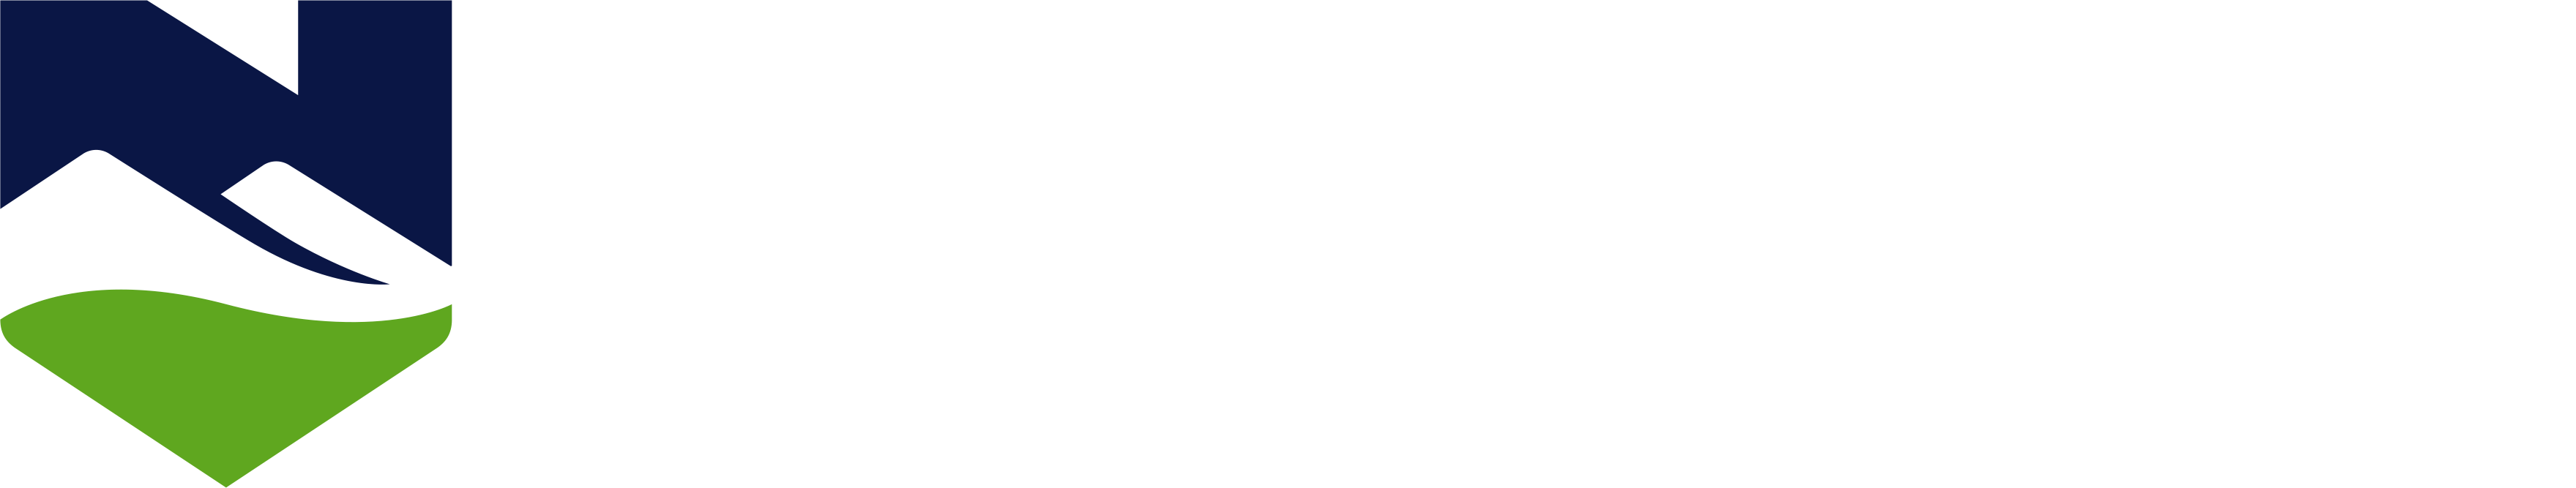 vermont university visit